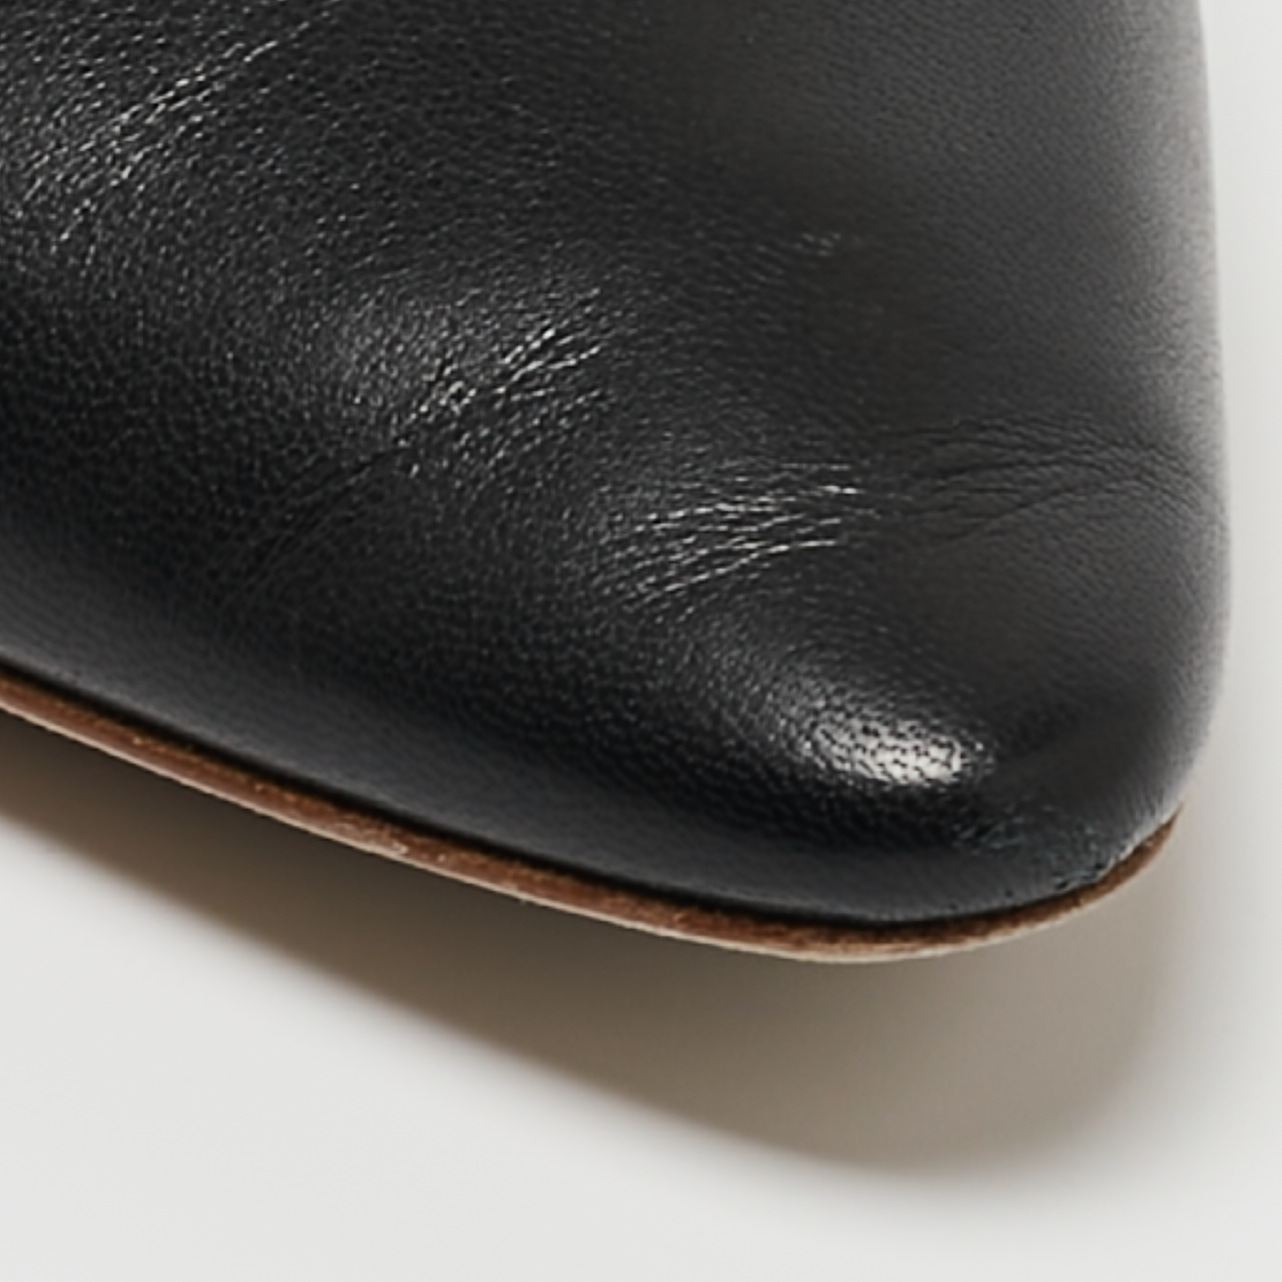 Miu Miu Black Leather Crystal Embellished Pointed Toe Ballet Flats Size 36